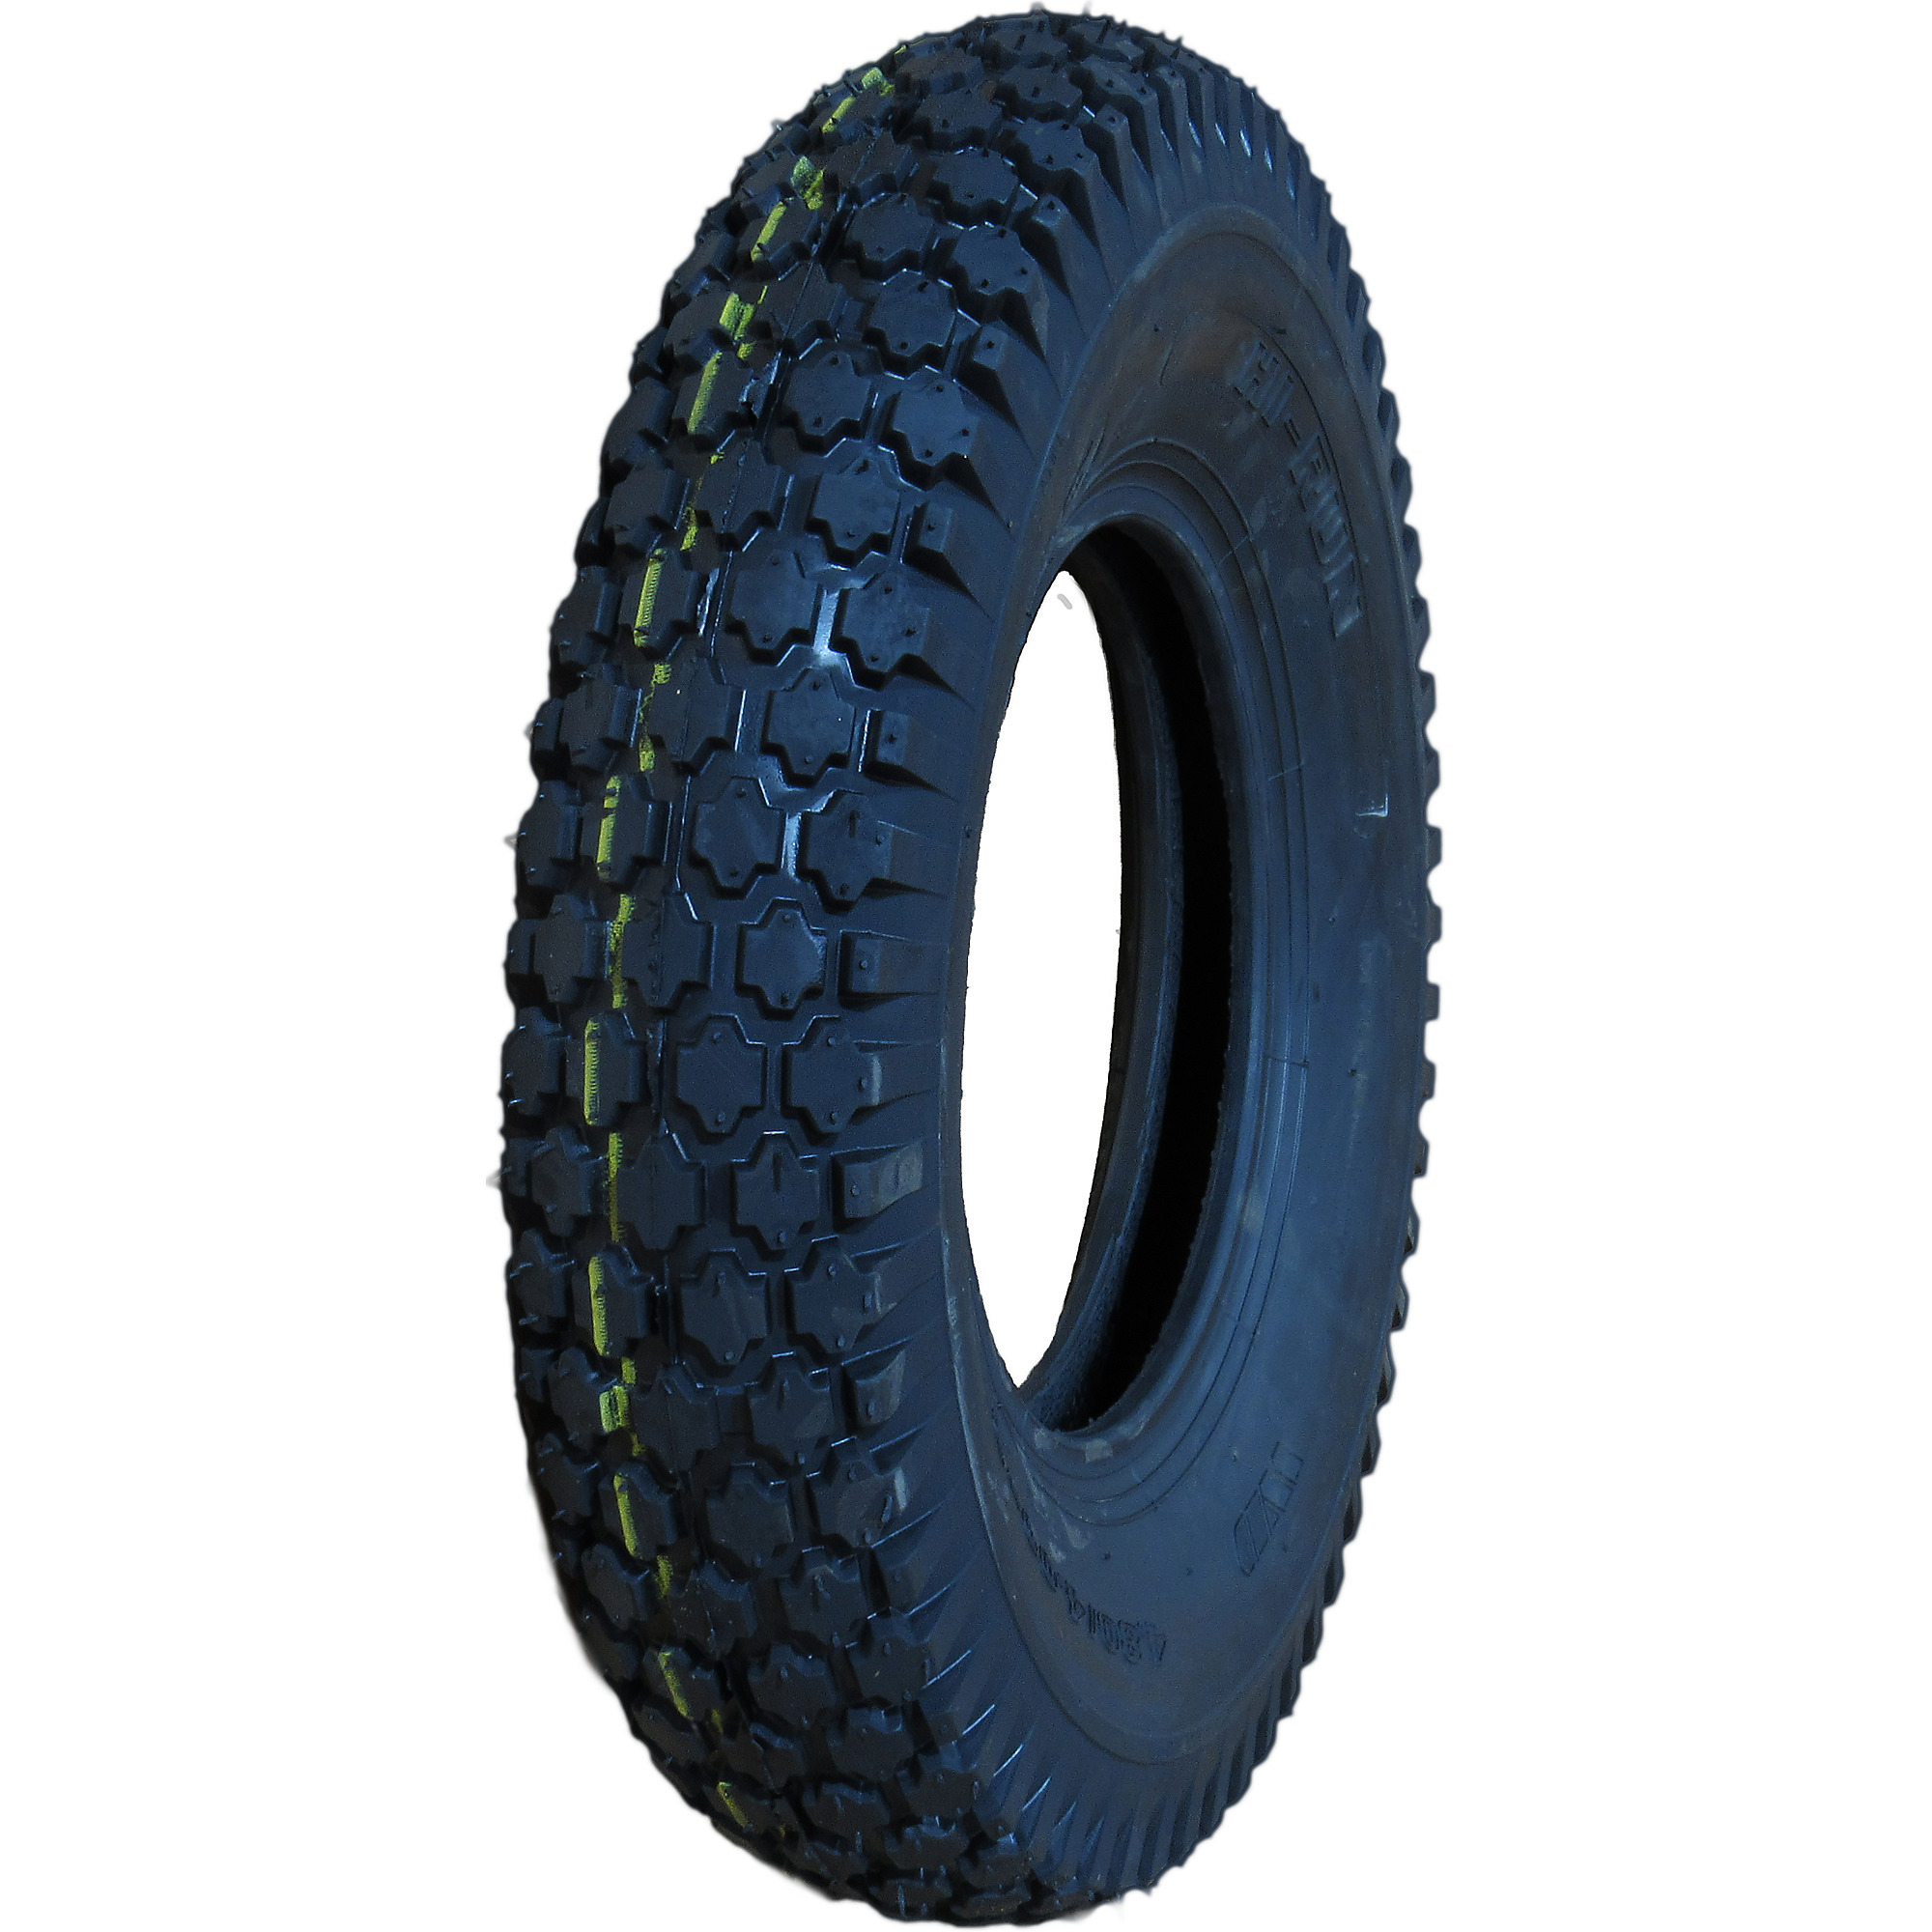 HI-RUN, Lawn Garden Tire, Stud, Tire Size 4.80/4.00-8 Load Range Rating A, Model WD1300